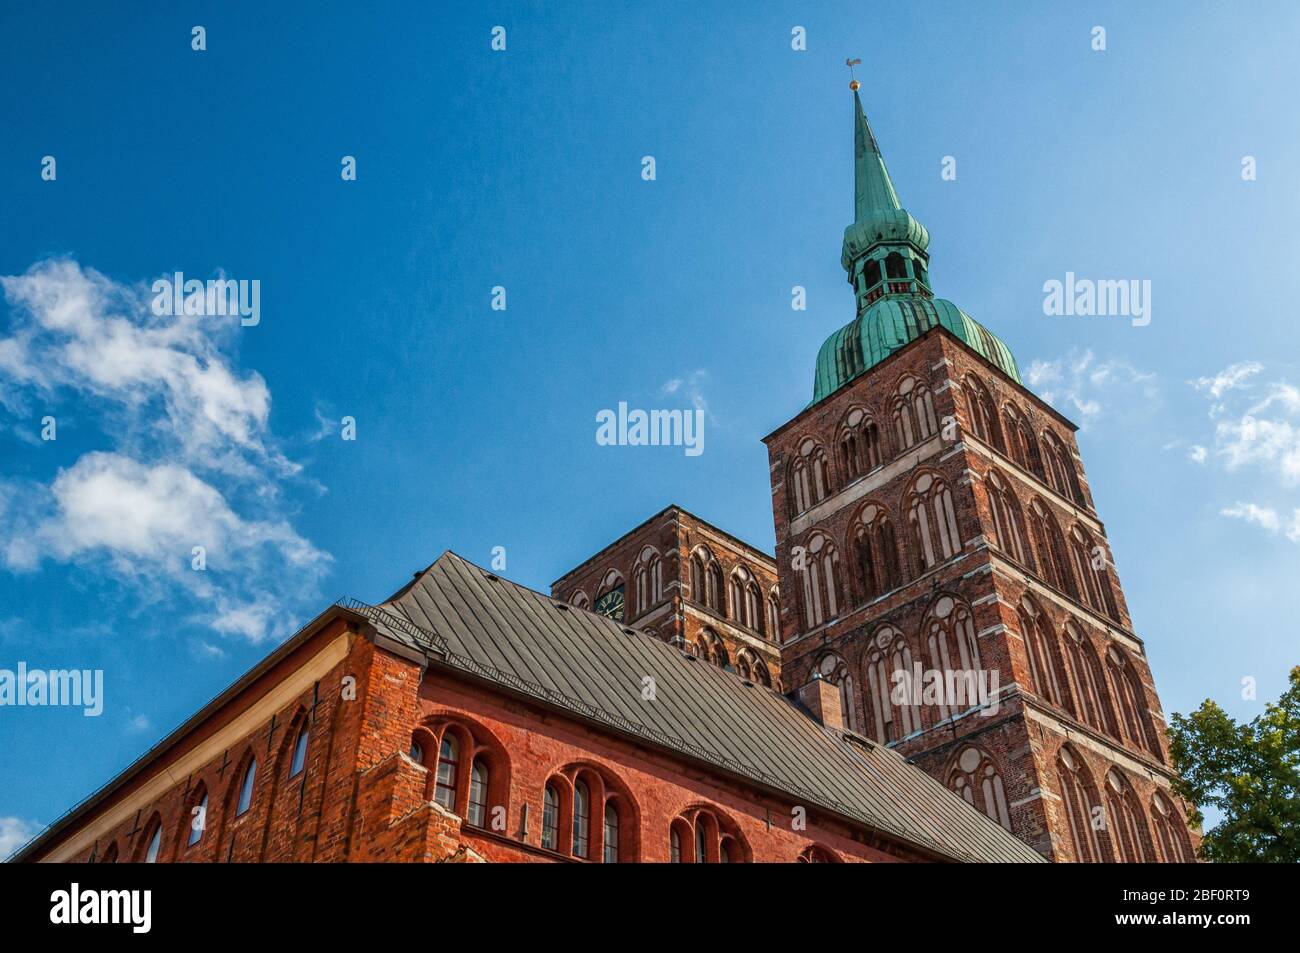 The St. Nikolai church in Stralsund Stock Photo